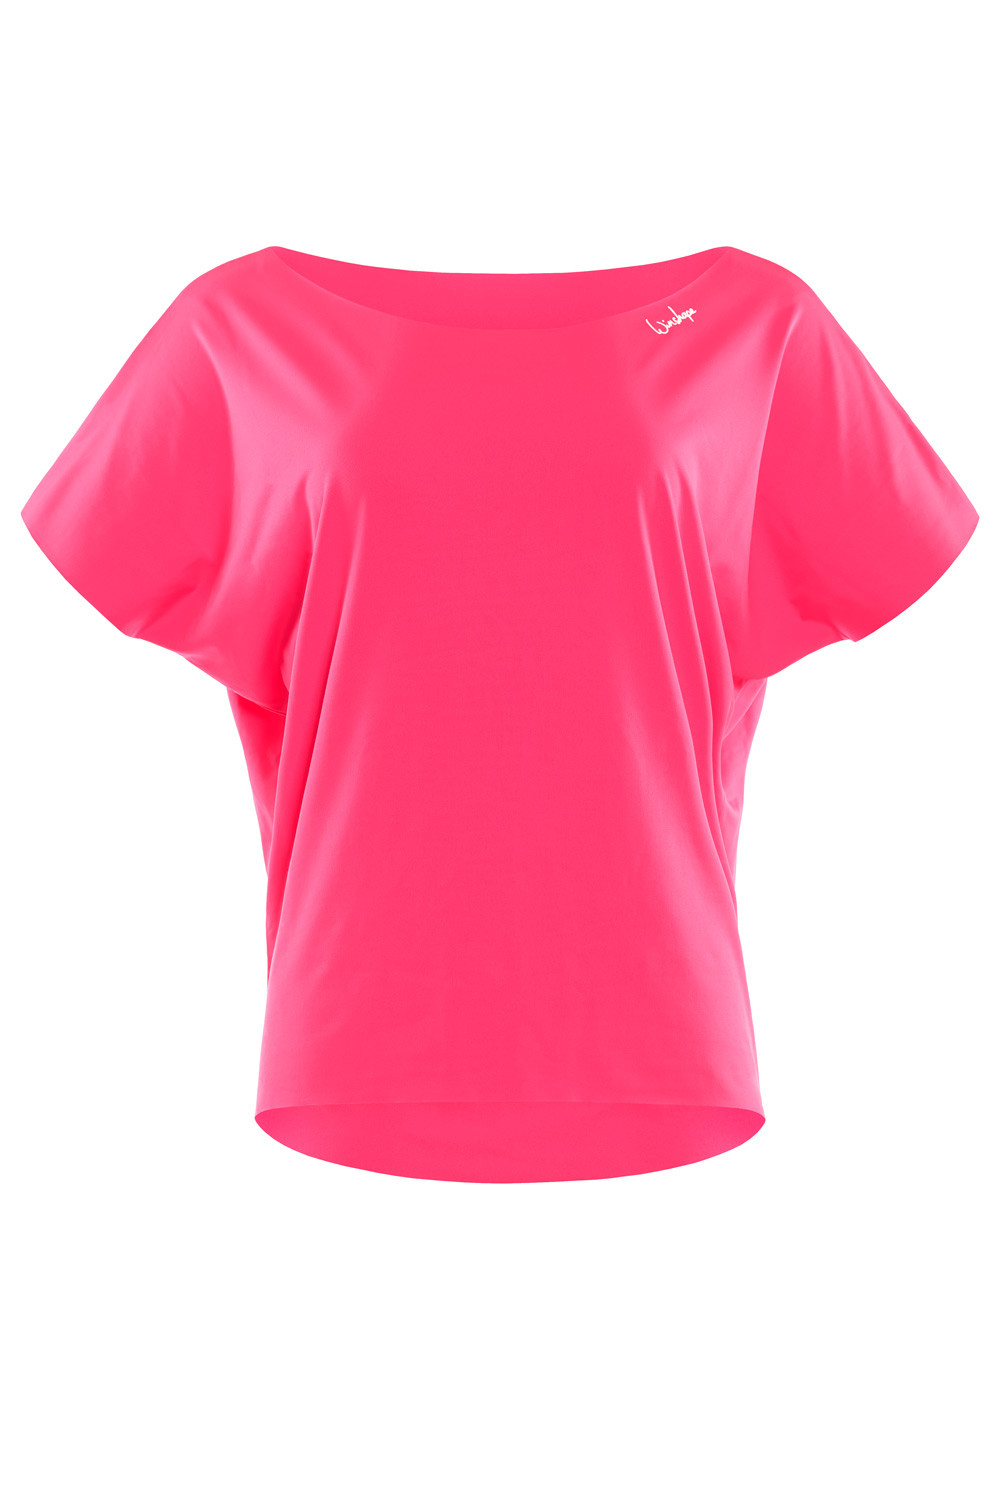 DT101, Dance-Top Style Winshape neon Dance Functional pink, Light